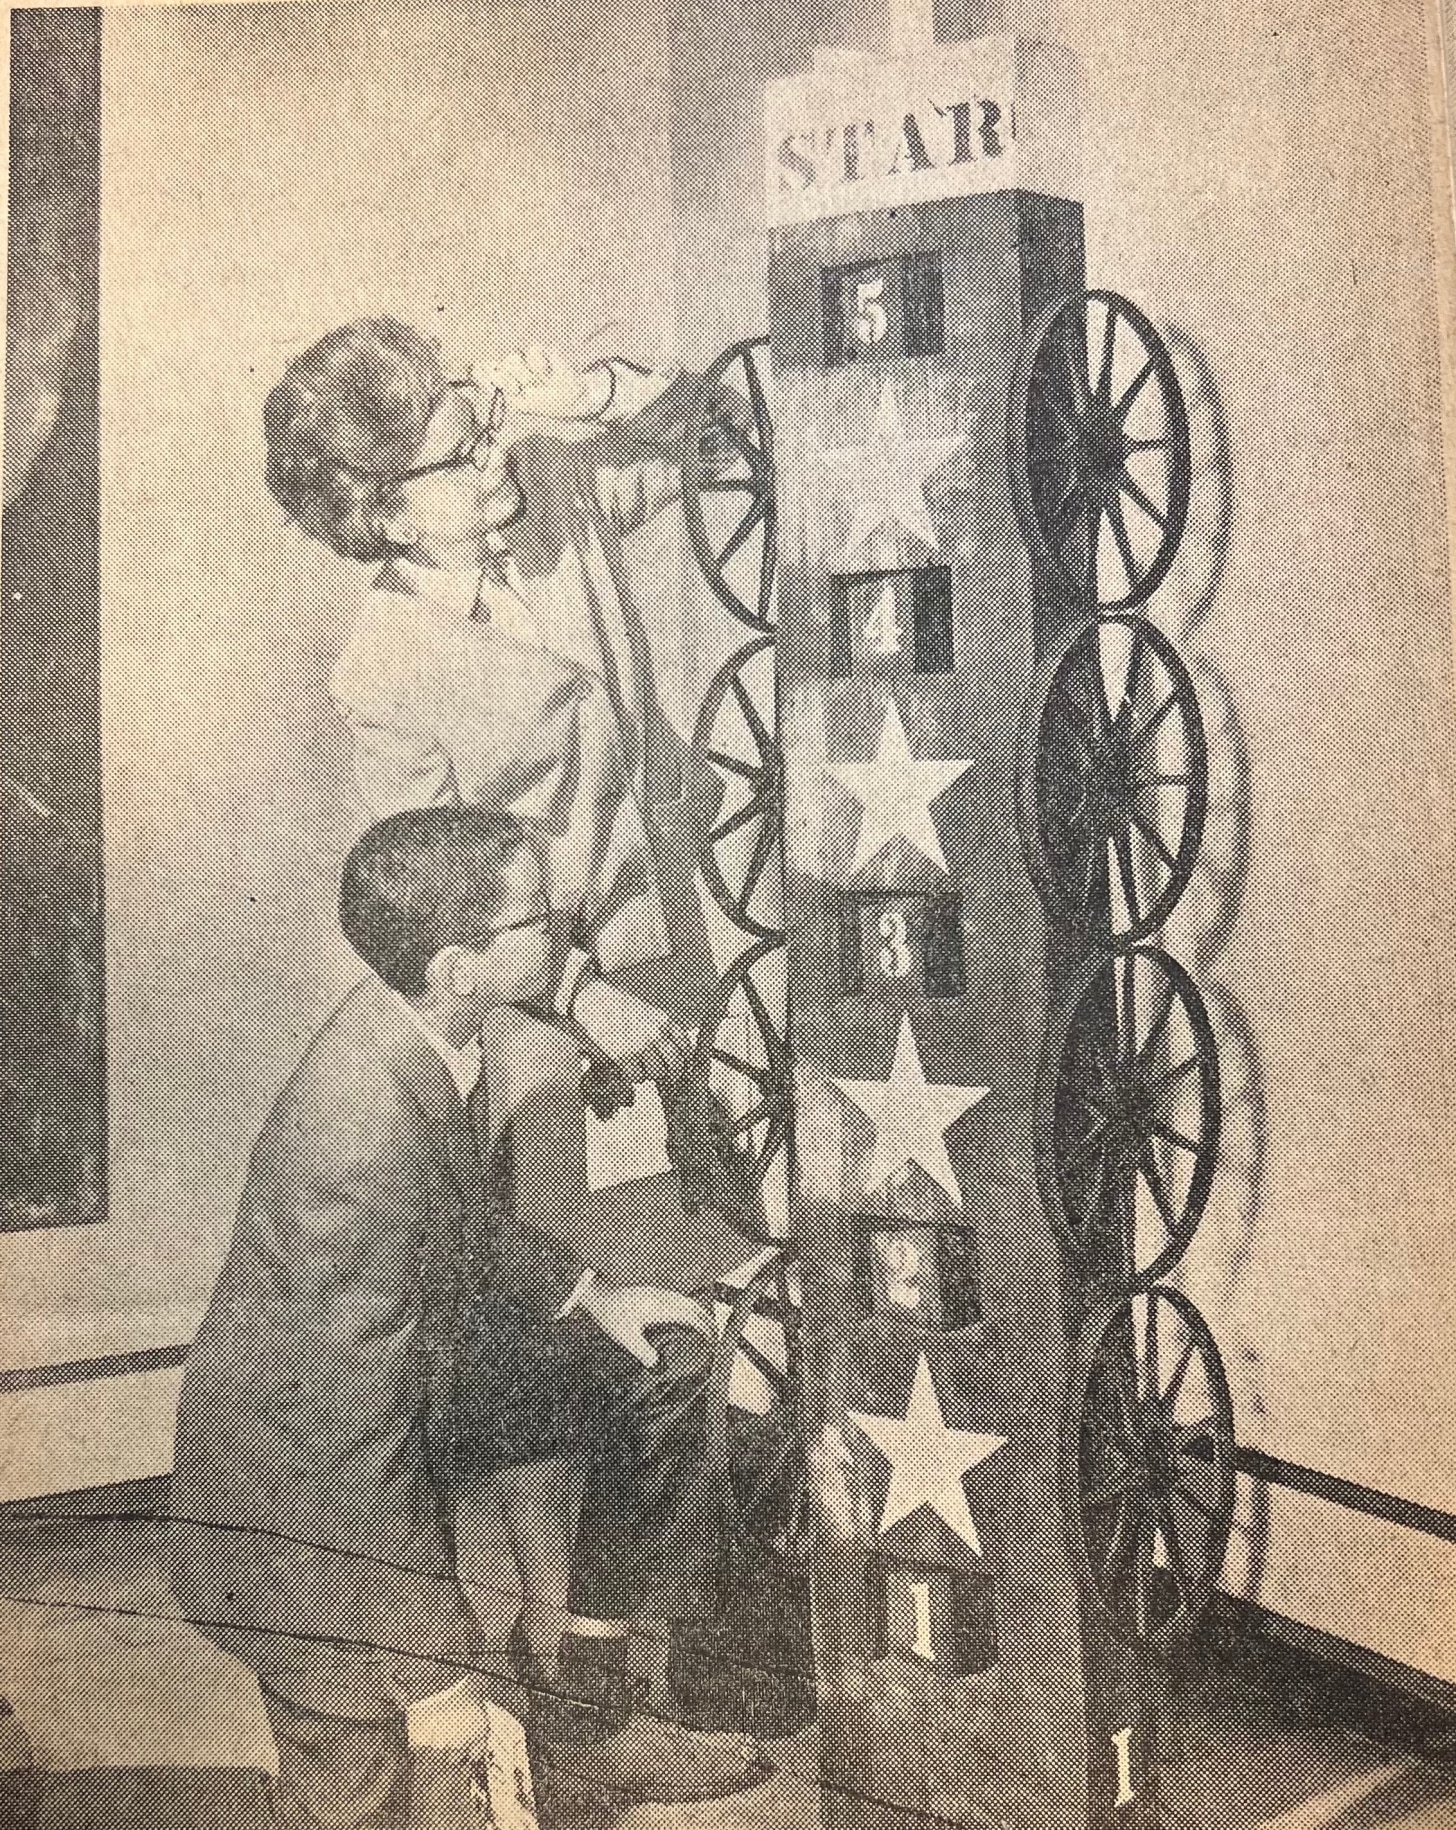 Visitors examining Star (1960&ndash;62) in&nbsp;Mixed Media and Pop Art, at the Albright-Knox Art Gallery, Buffalo, New York,&nbsp;November 19&ndash;December 15, 1963, &nbsp;